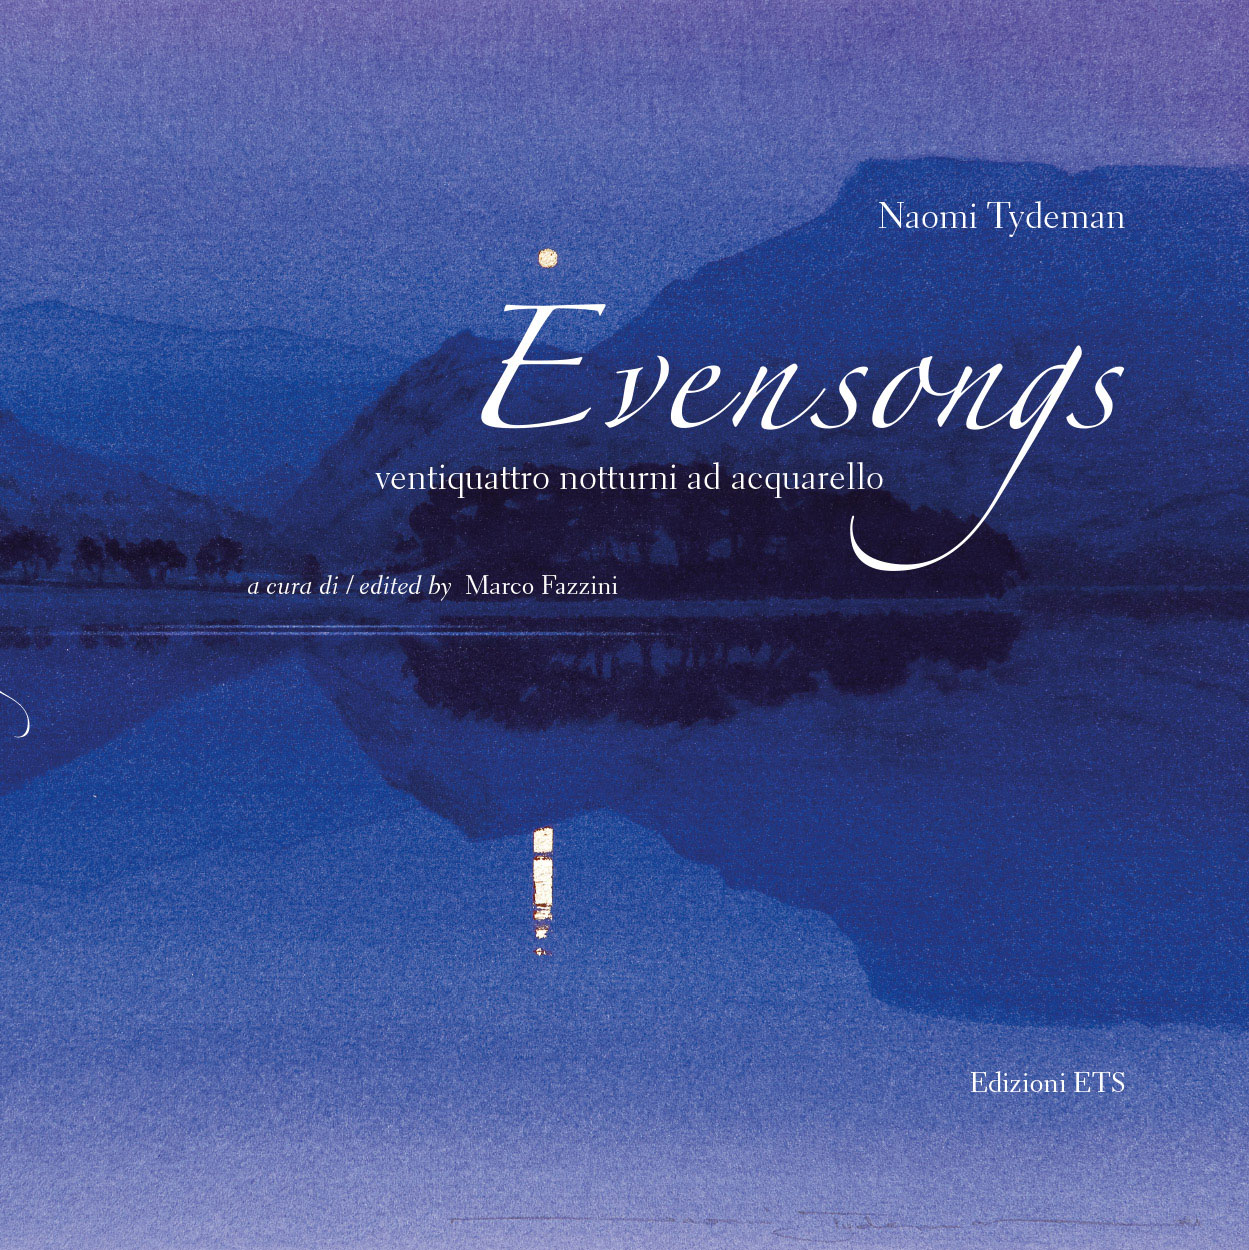 1/ - Naomi Tydeman, Evensongs, Edizioni ETS - acquarello